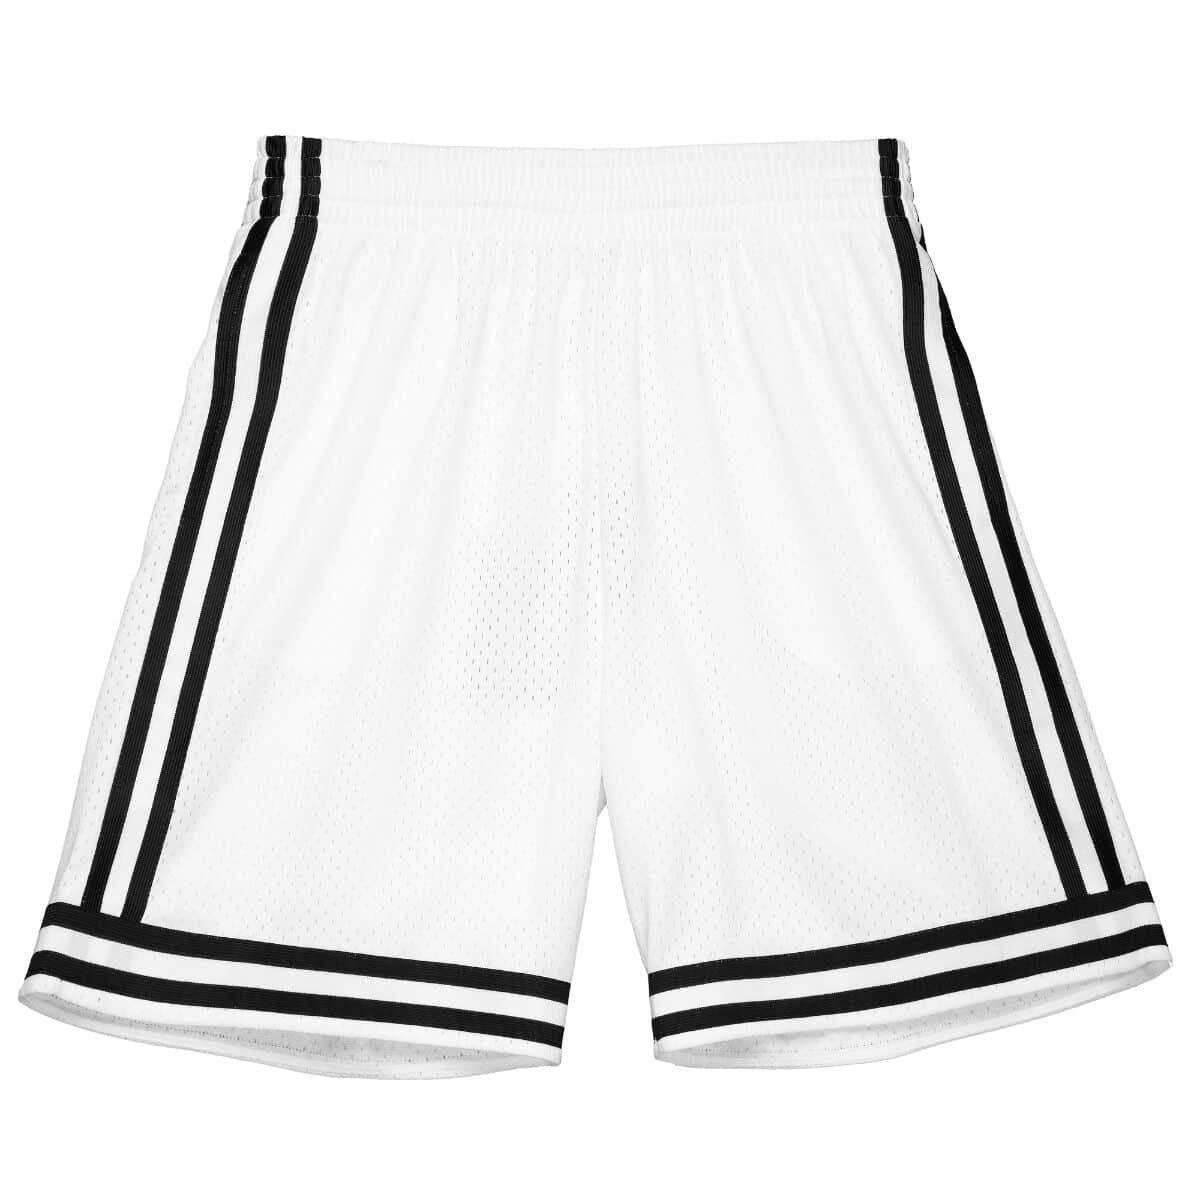 Boston NBA & Mitchell Ness Swingman Shorts 1985 White Celtics